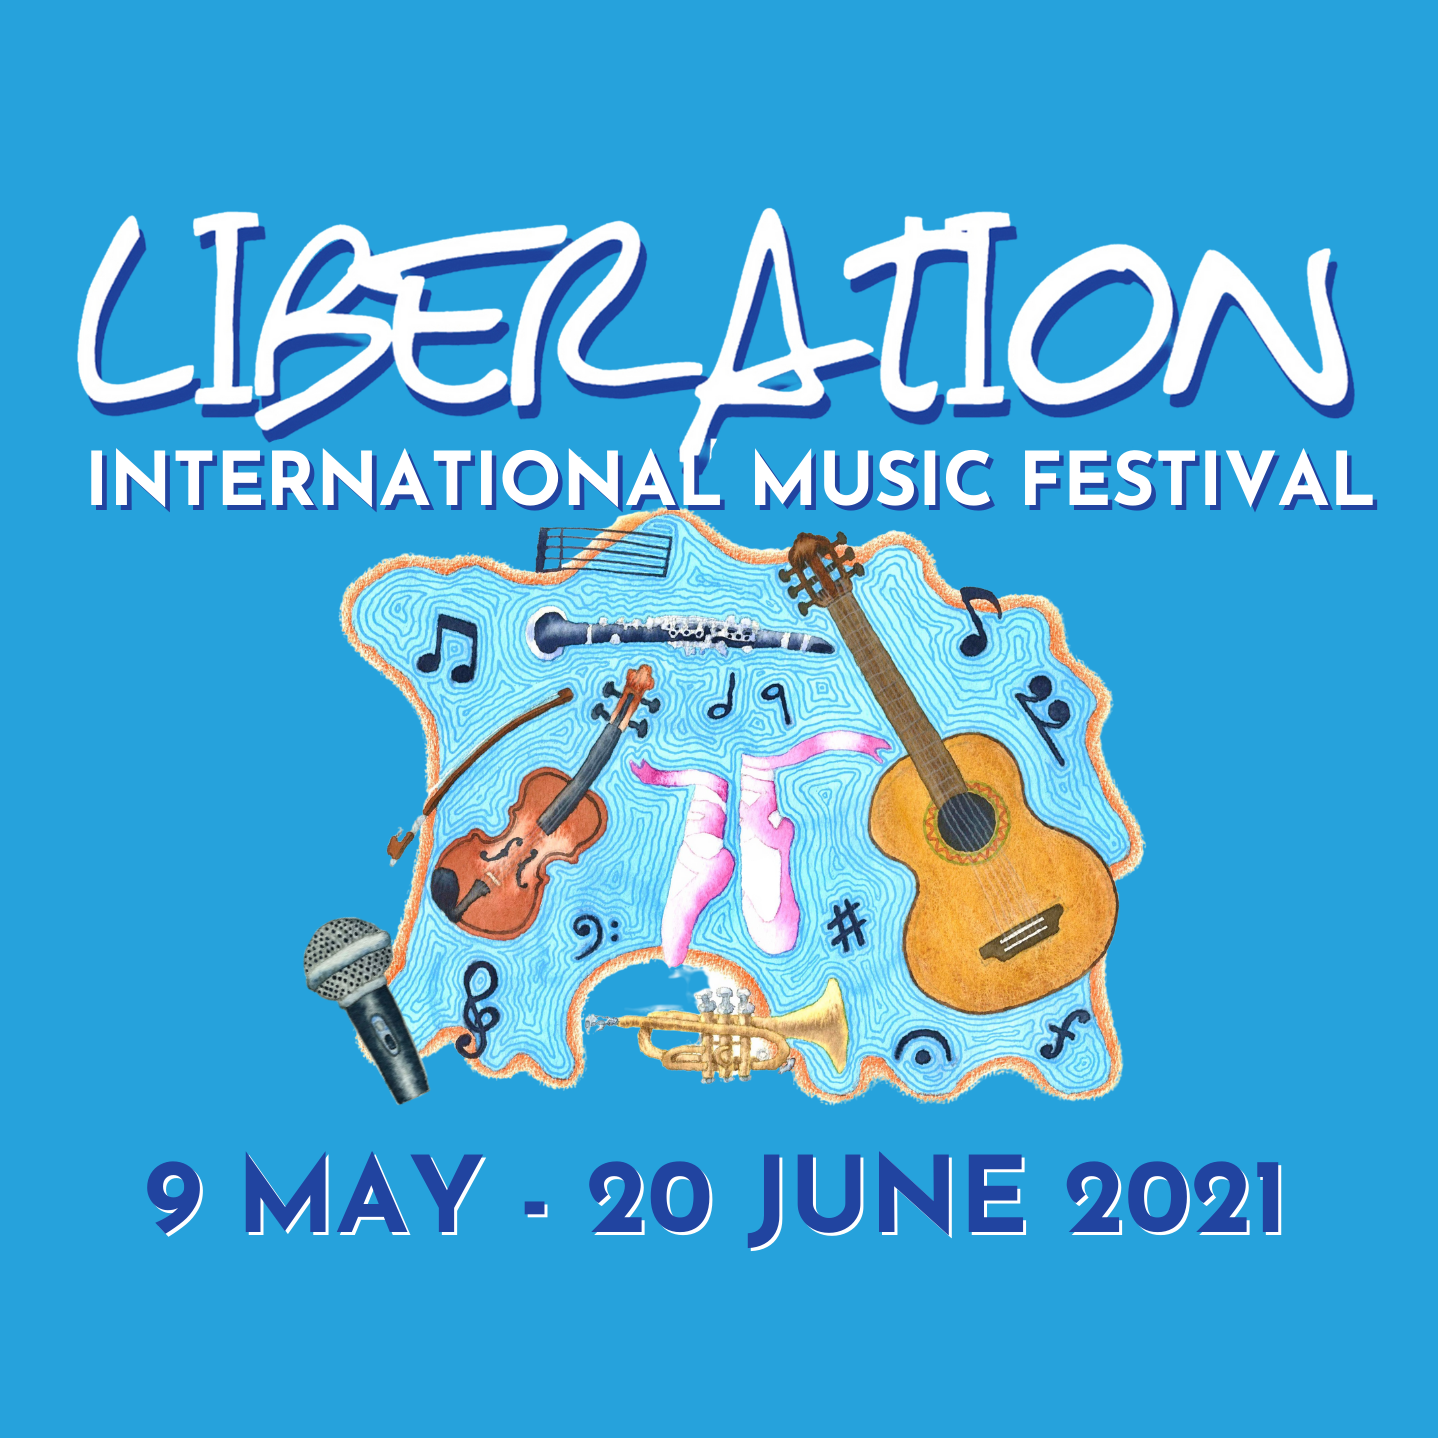 2021 Liberation International Music Festival - Clare Bowskill (1).png